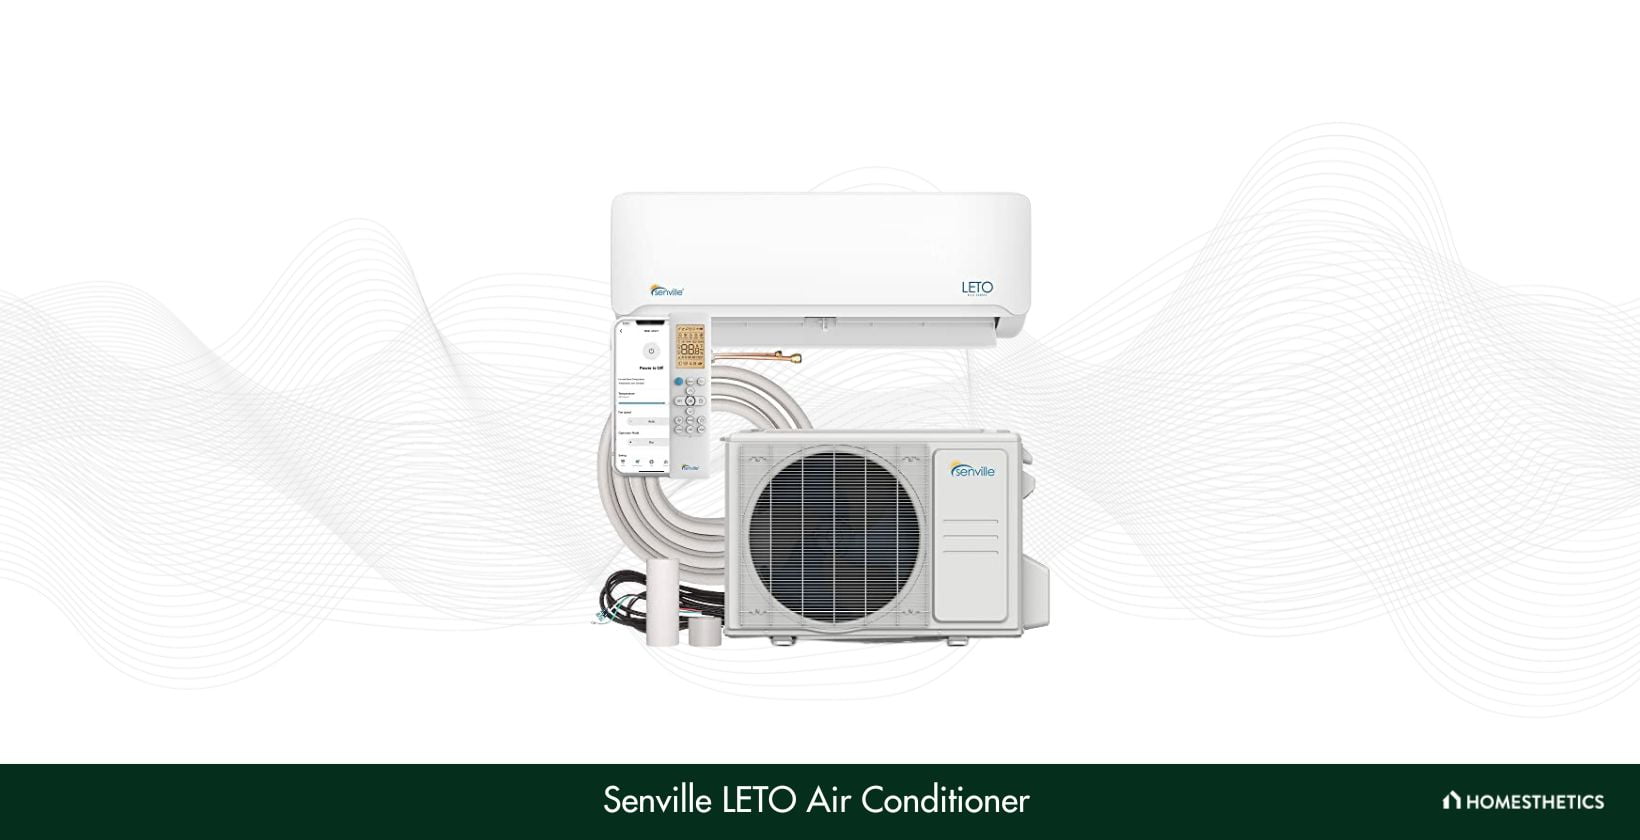 Senville LETO Air Conditioner